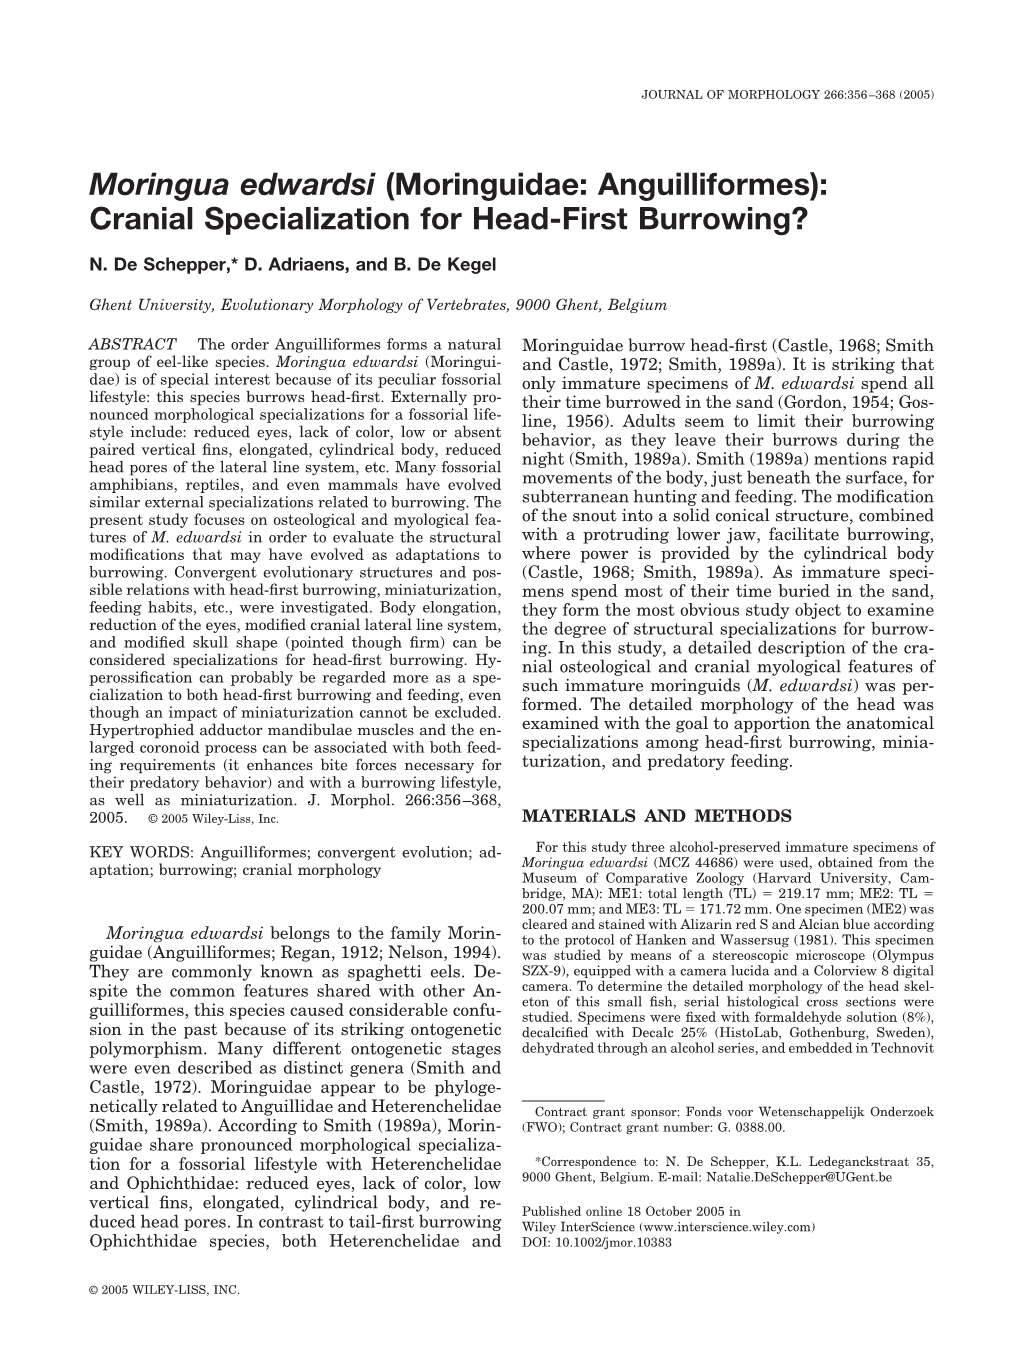 Moringua Edwardsi (Moringuidae: Anguilliformes): Cranial Specialization for Head-First Burrowing?